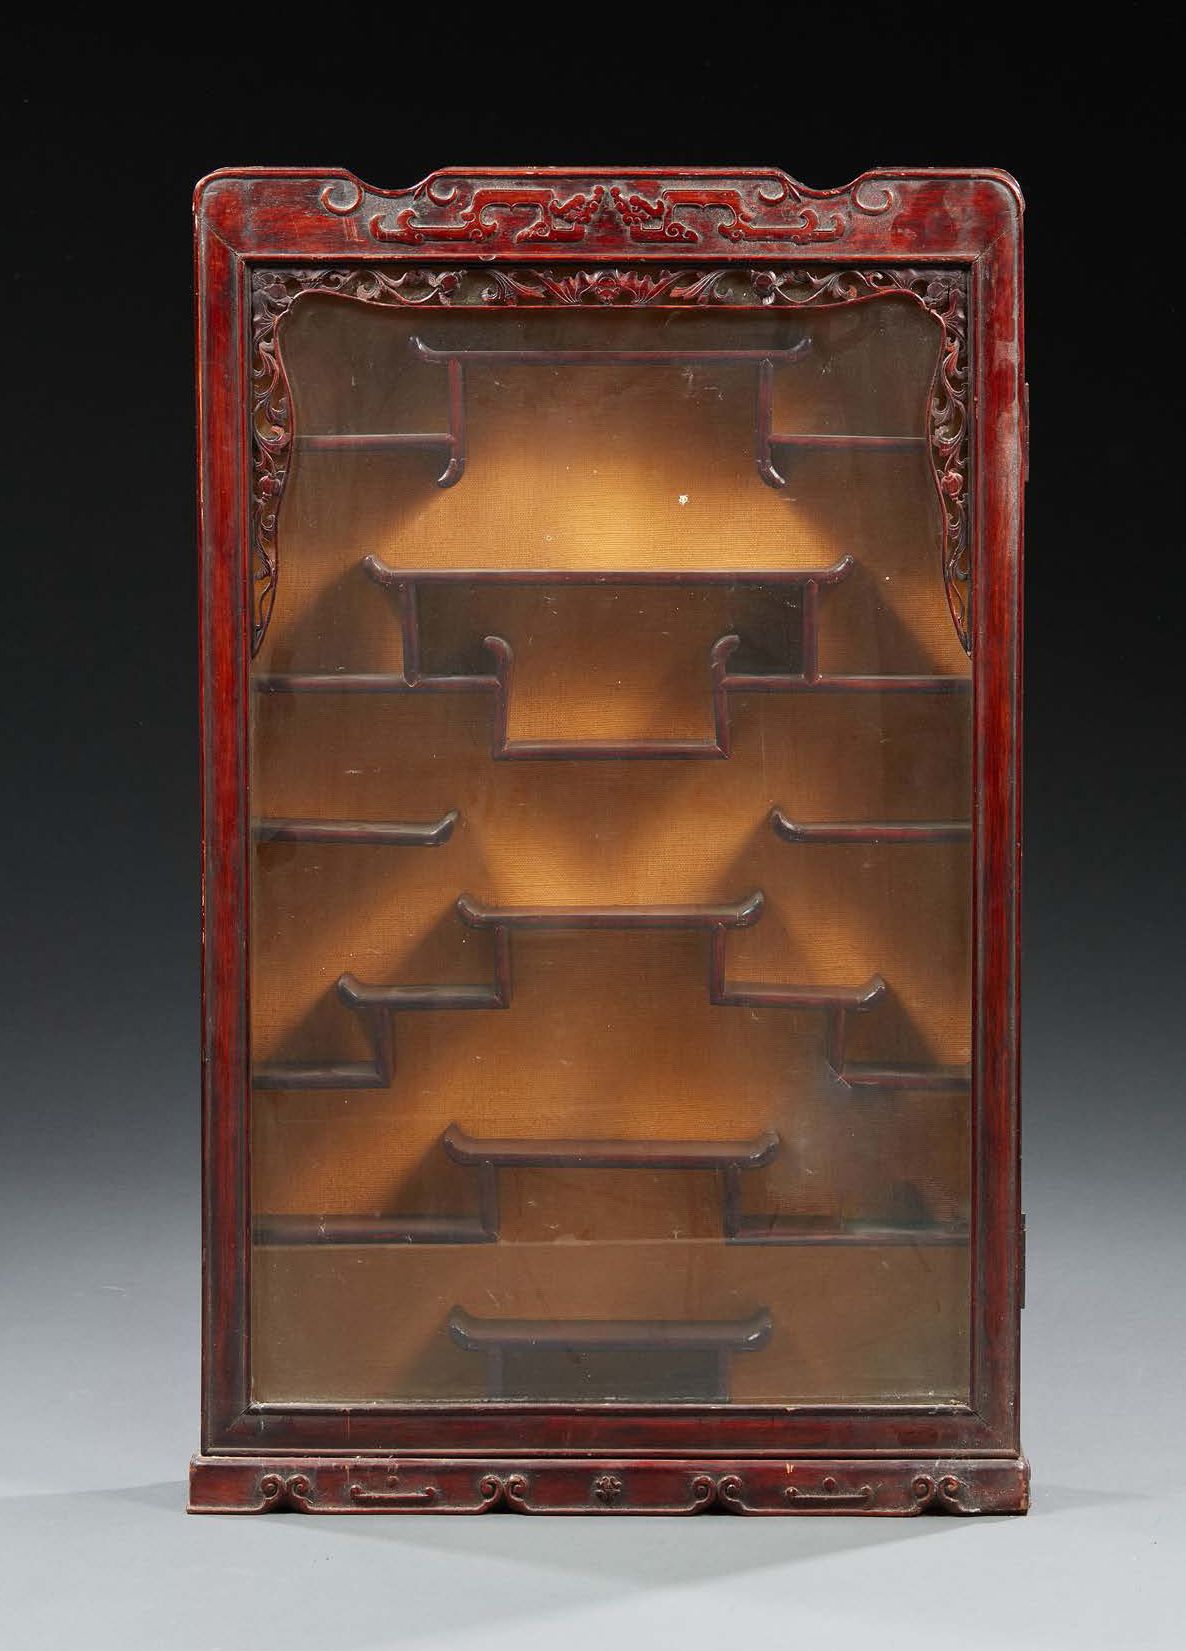 CHINE A carved wood wall display case.
Around 1900.
Dim. : 83.5 x 51 x 11 cm